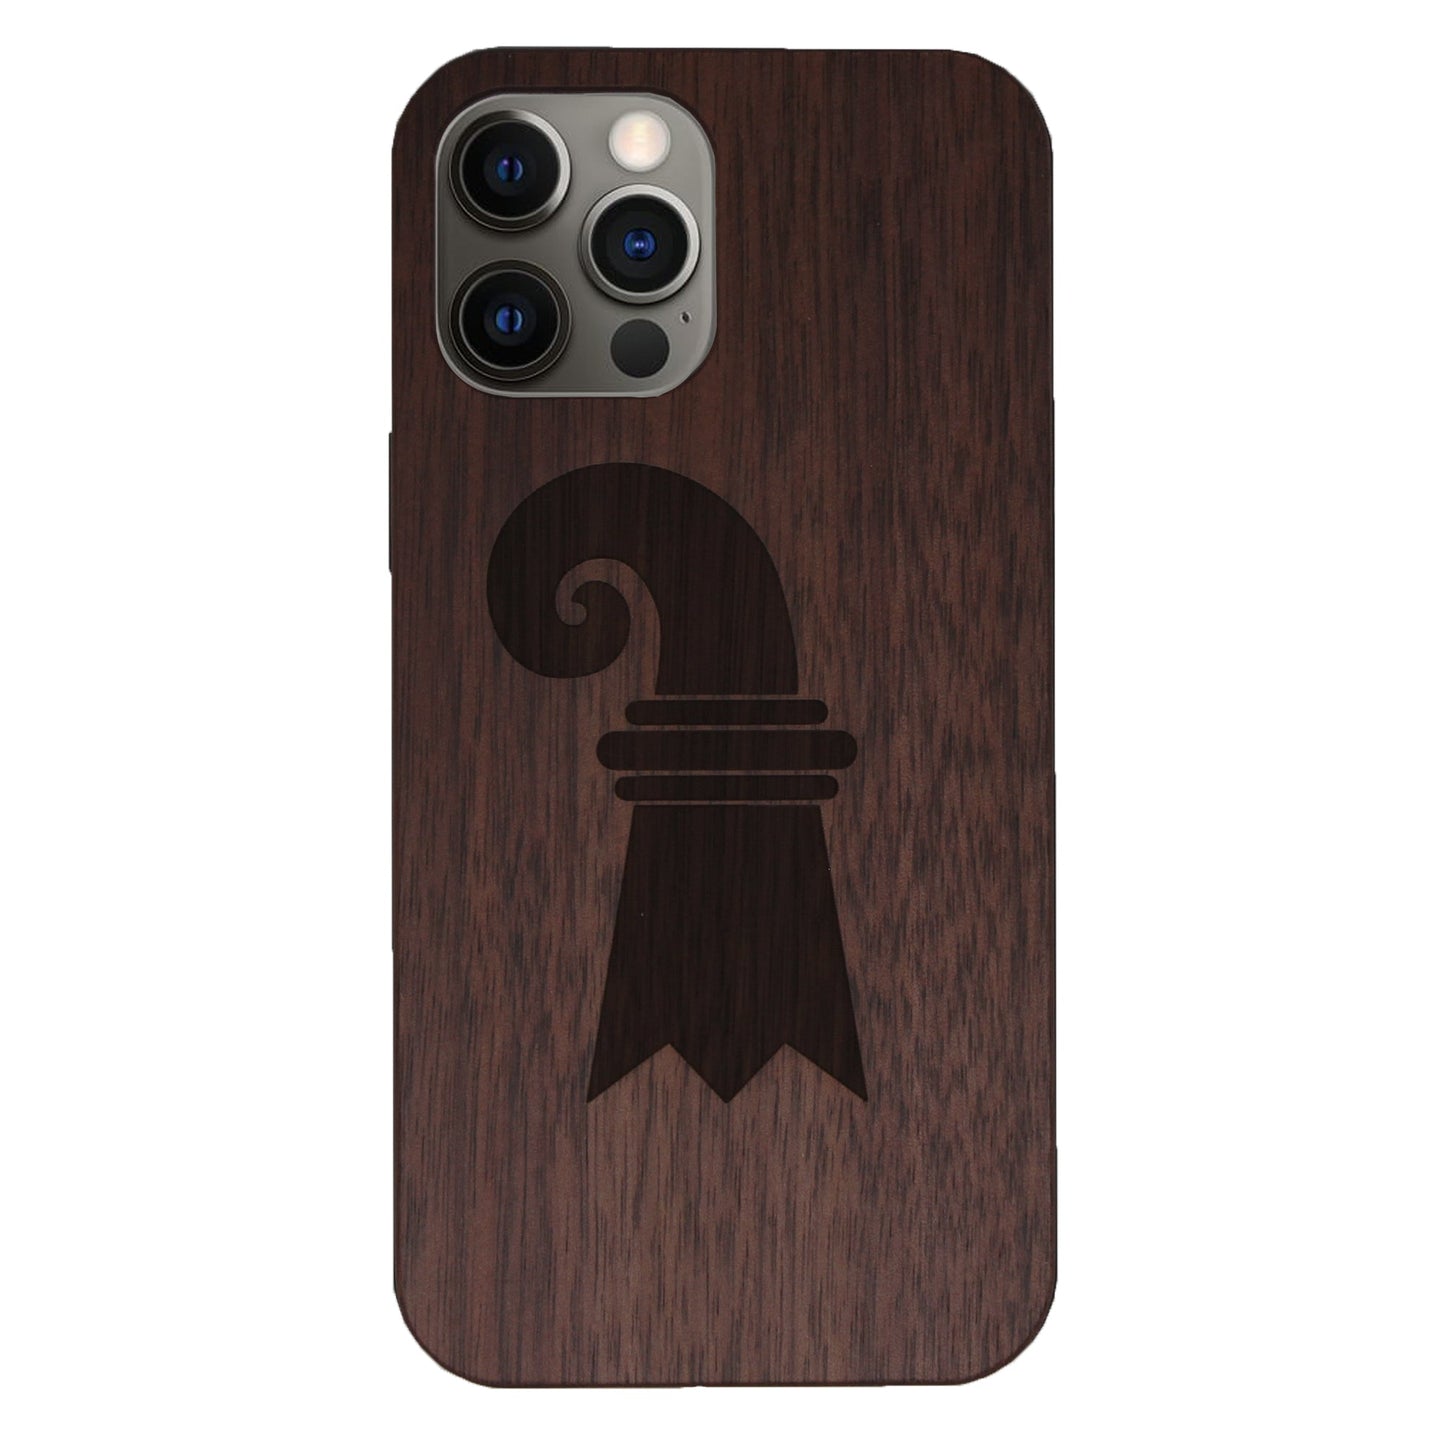 Baslerstab Eden case made of walnut wood for iPhone 12 Pro Max 